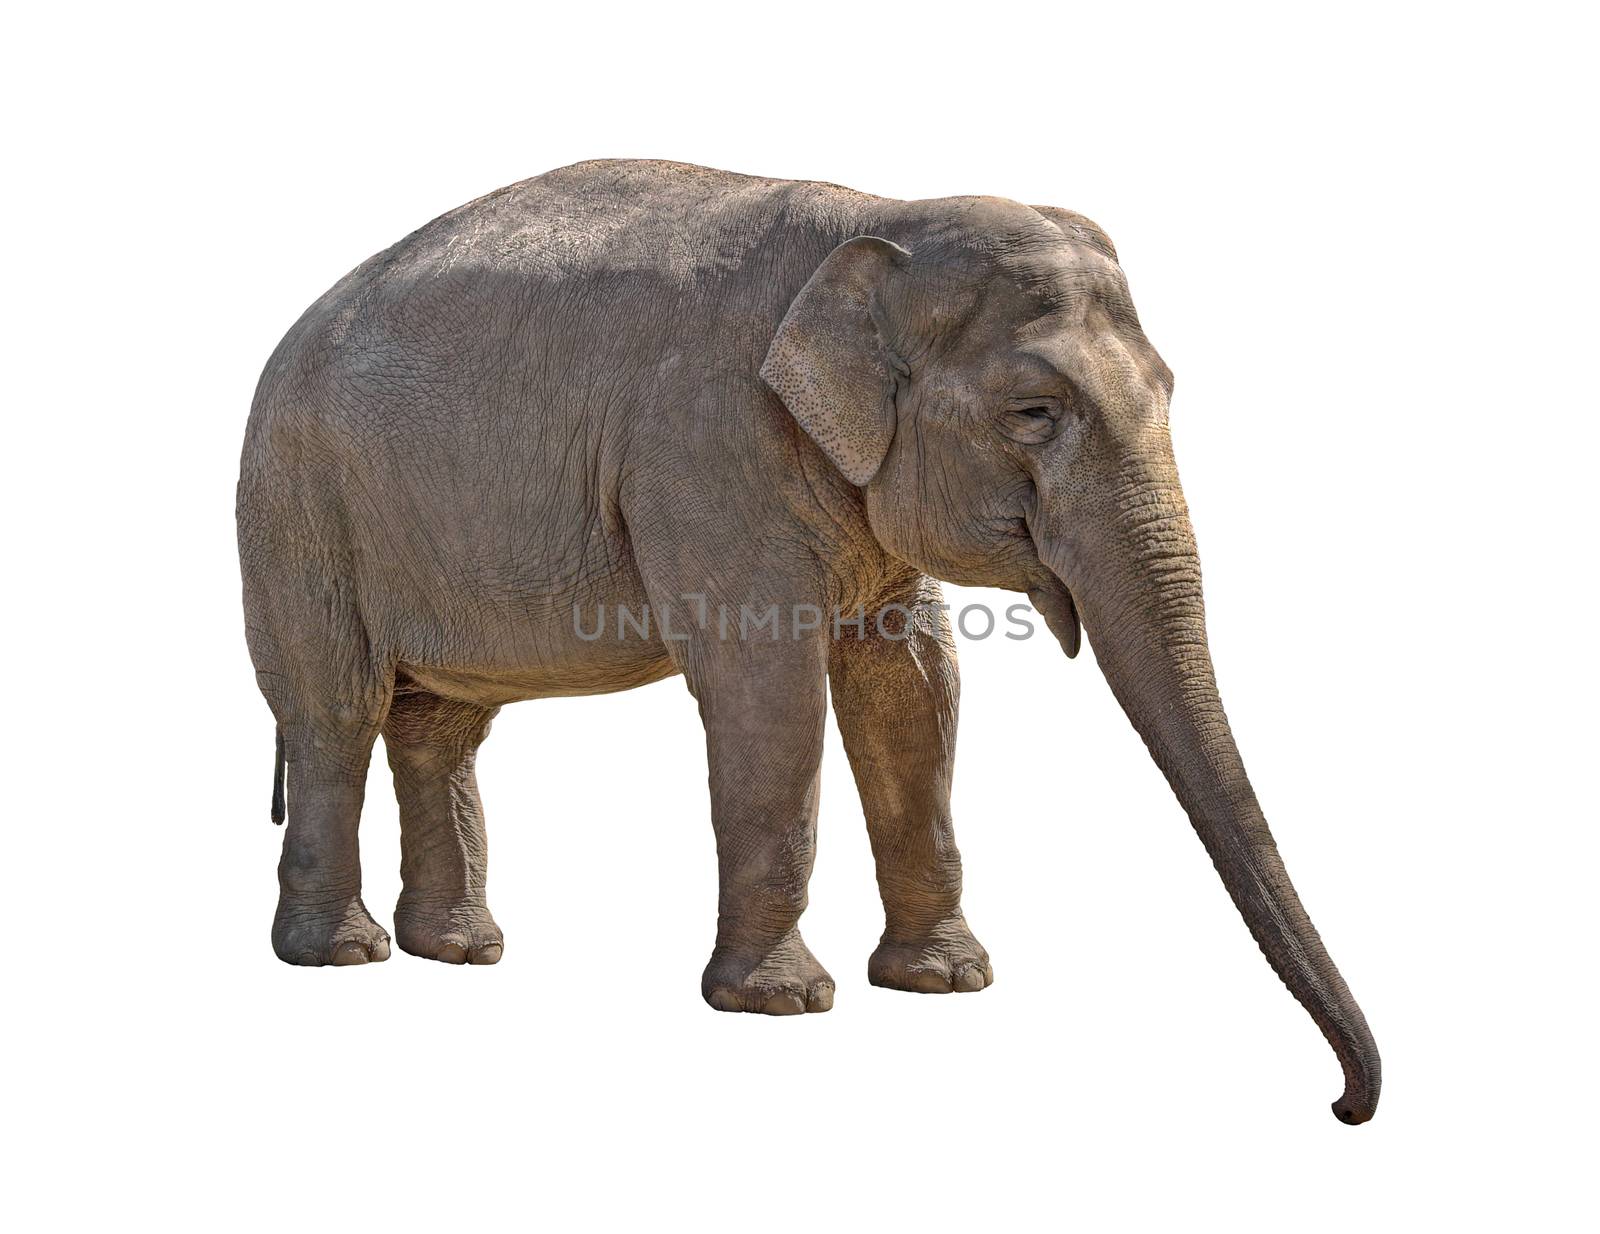 Young she-elephant cutout by vkstudio